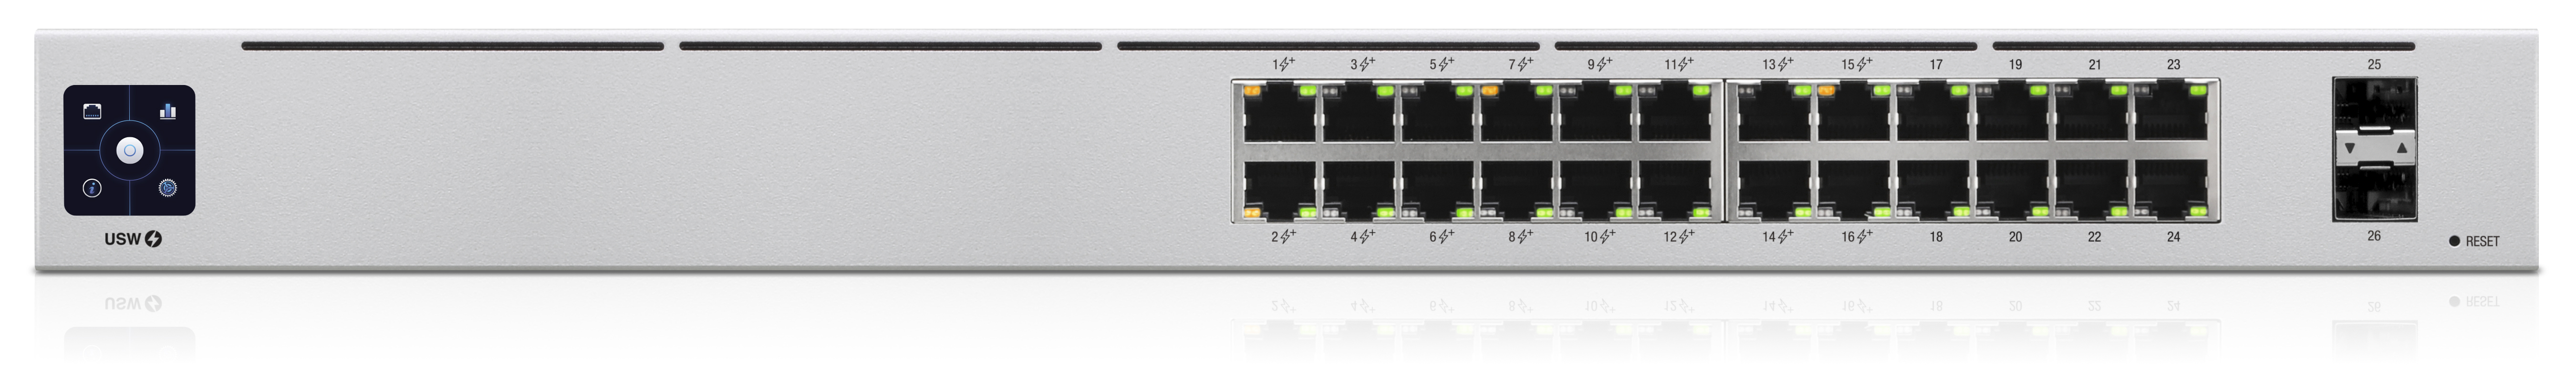 Ubiquiti  UniFi Switch USW-24-POE Gen2, Capa 2 de 24 puertos (16 puertos PoE 802.3af/at + 8 puertos Gigabit) + 2 puertos 1G SFP, 95W, pantalla informativa